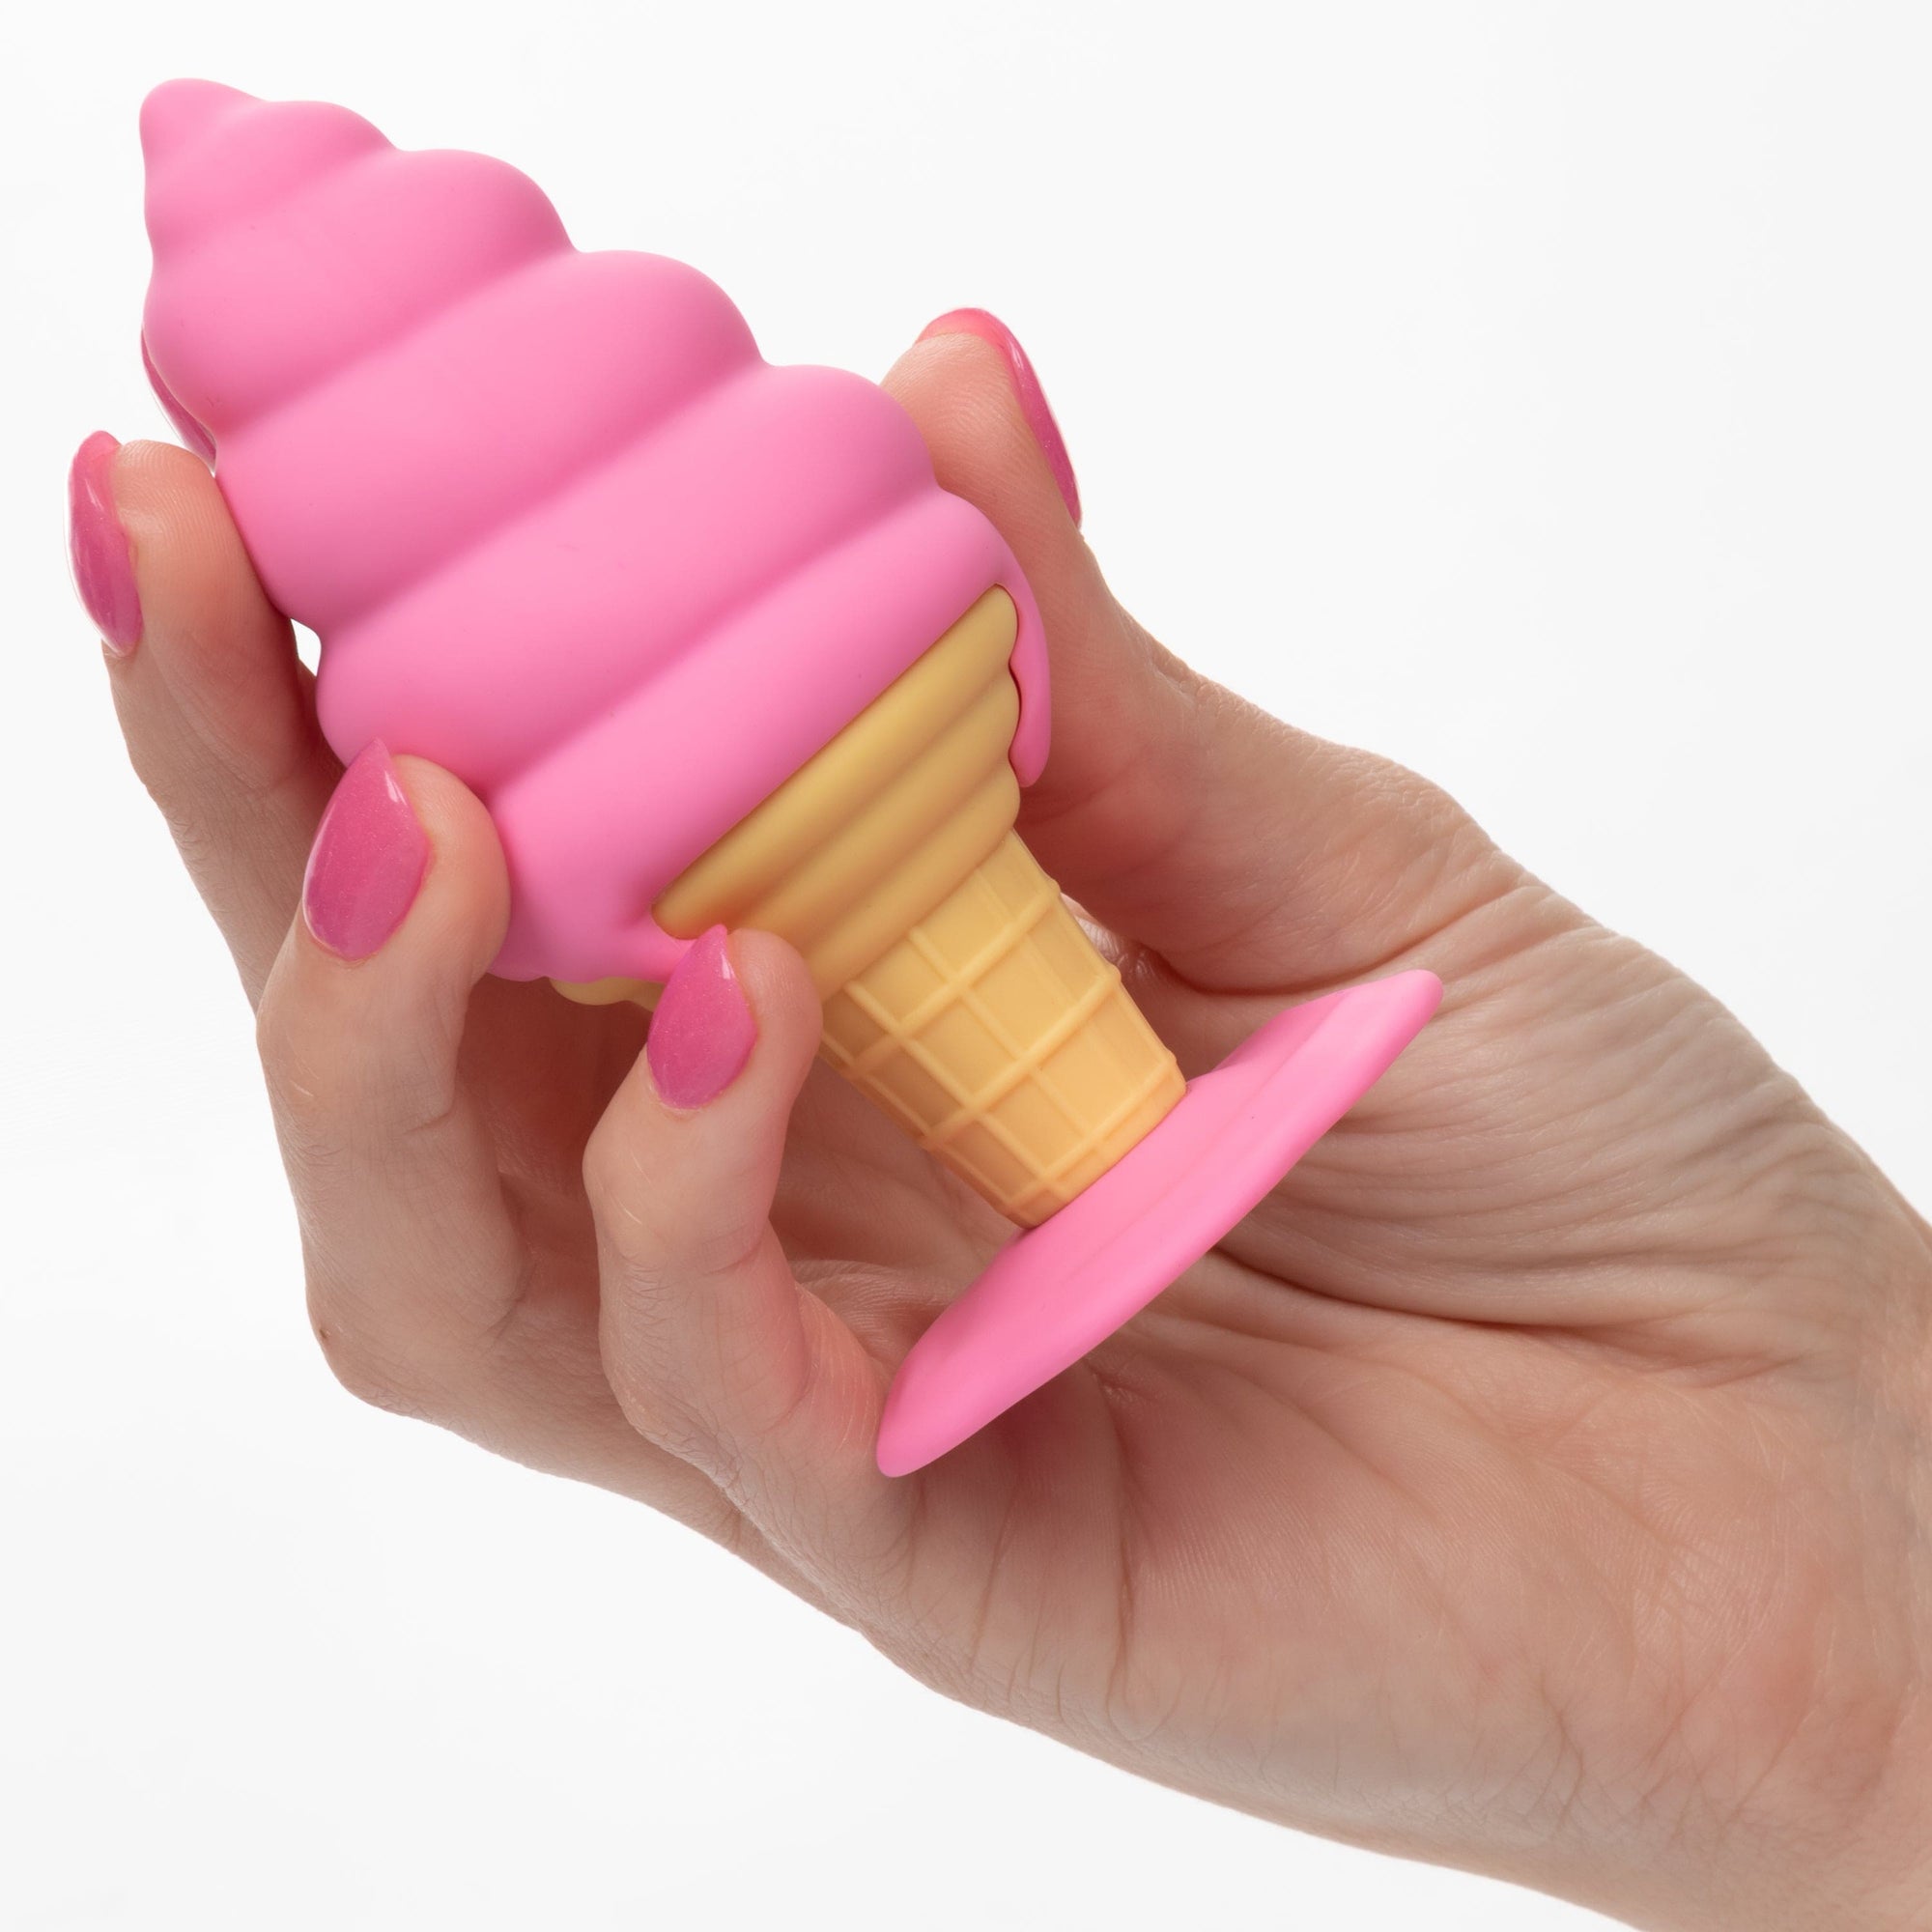 California Exotics - Naughty Bits Yum Bum Ice Cream Cone Butt Plug (Pink) -  Anal Plug (Non Vibration)  Durio.sg